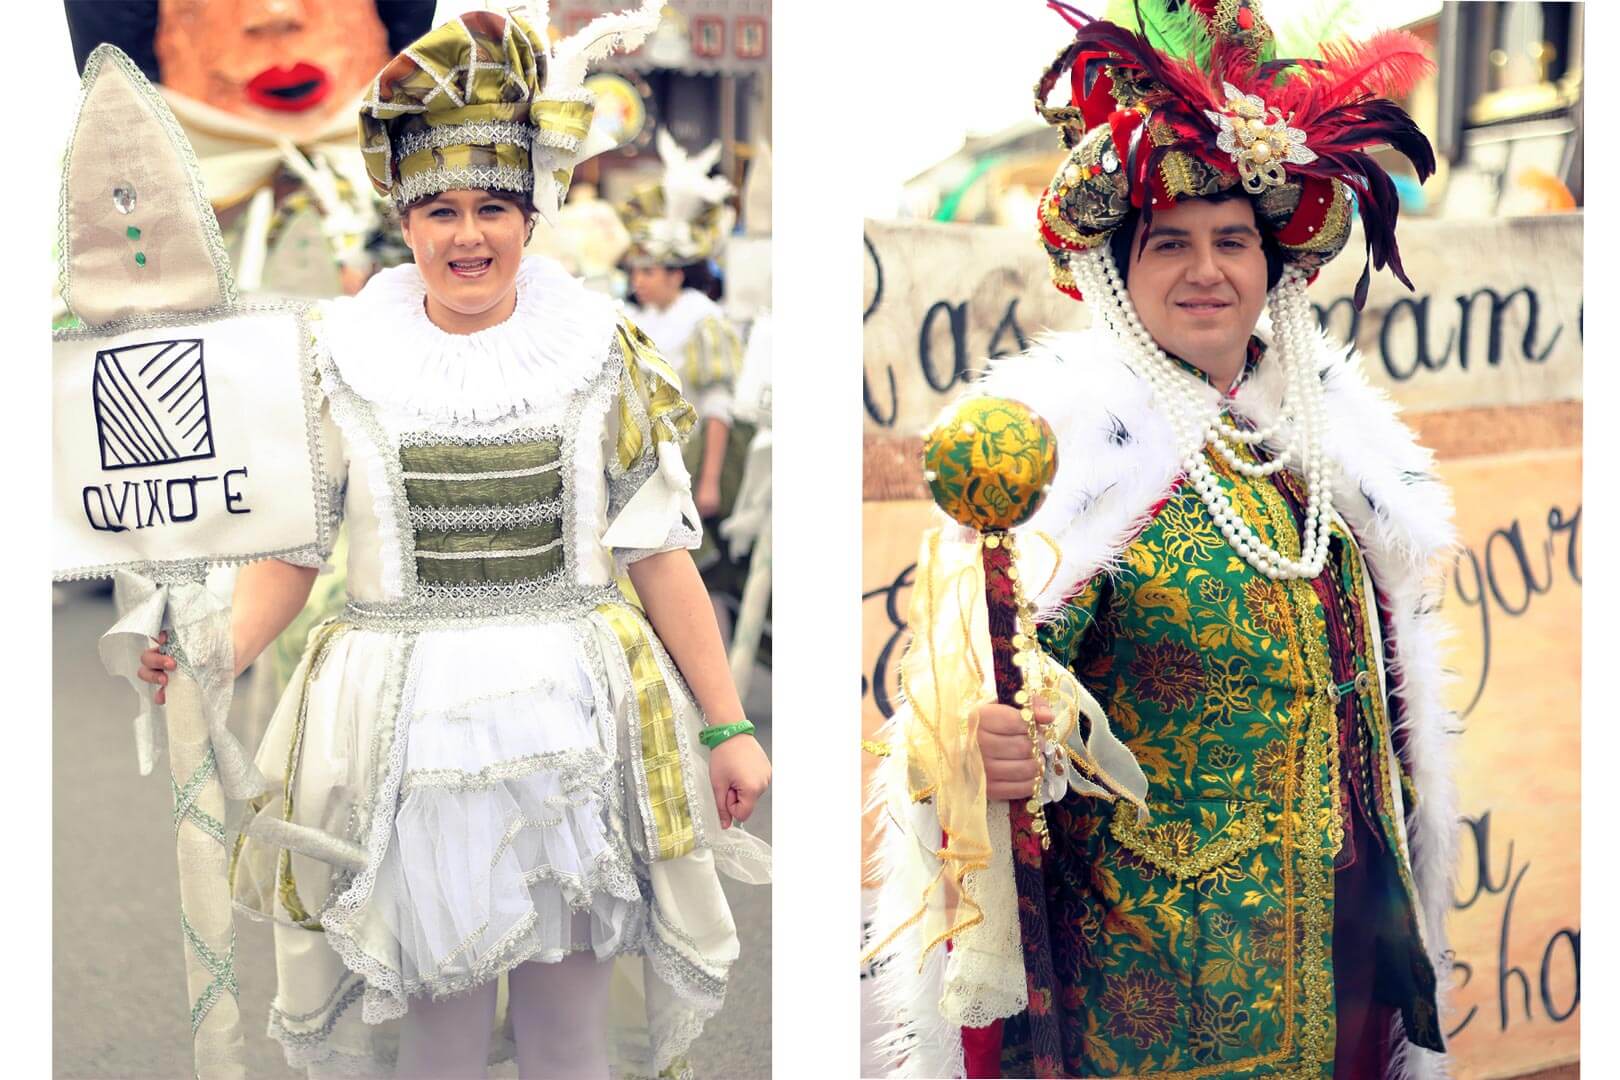 Costura Carnaval y Musicales